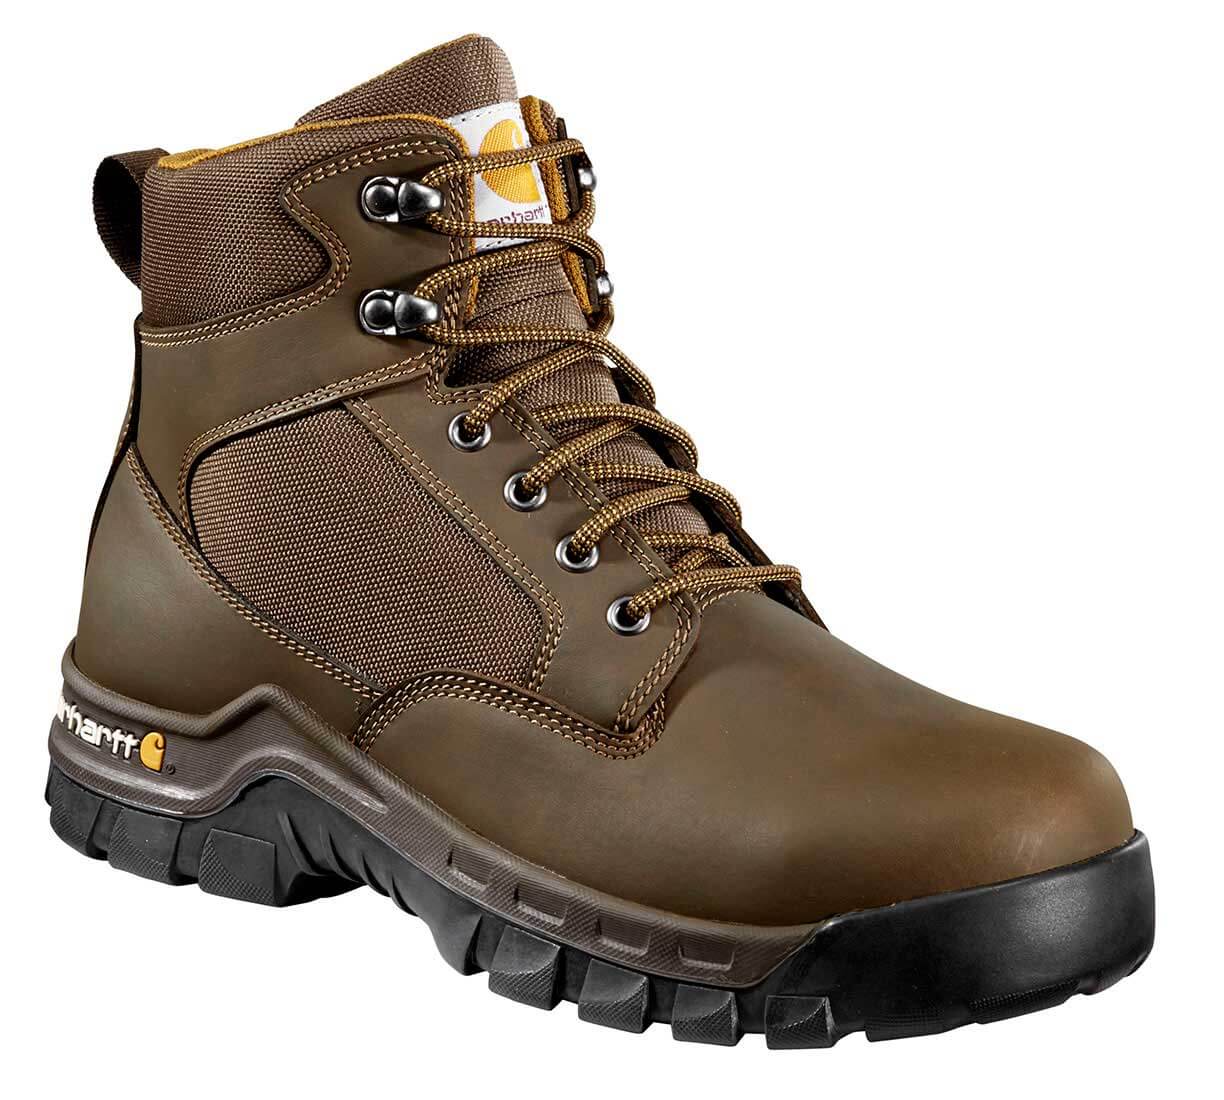 Carhartt - CMF6284 - Men's Brown Rugged Flex 6 Steel Safety Toe Work Boot - Medium - Wide